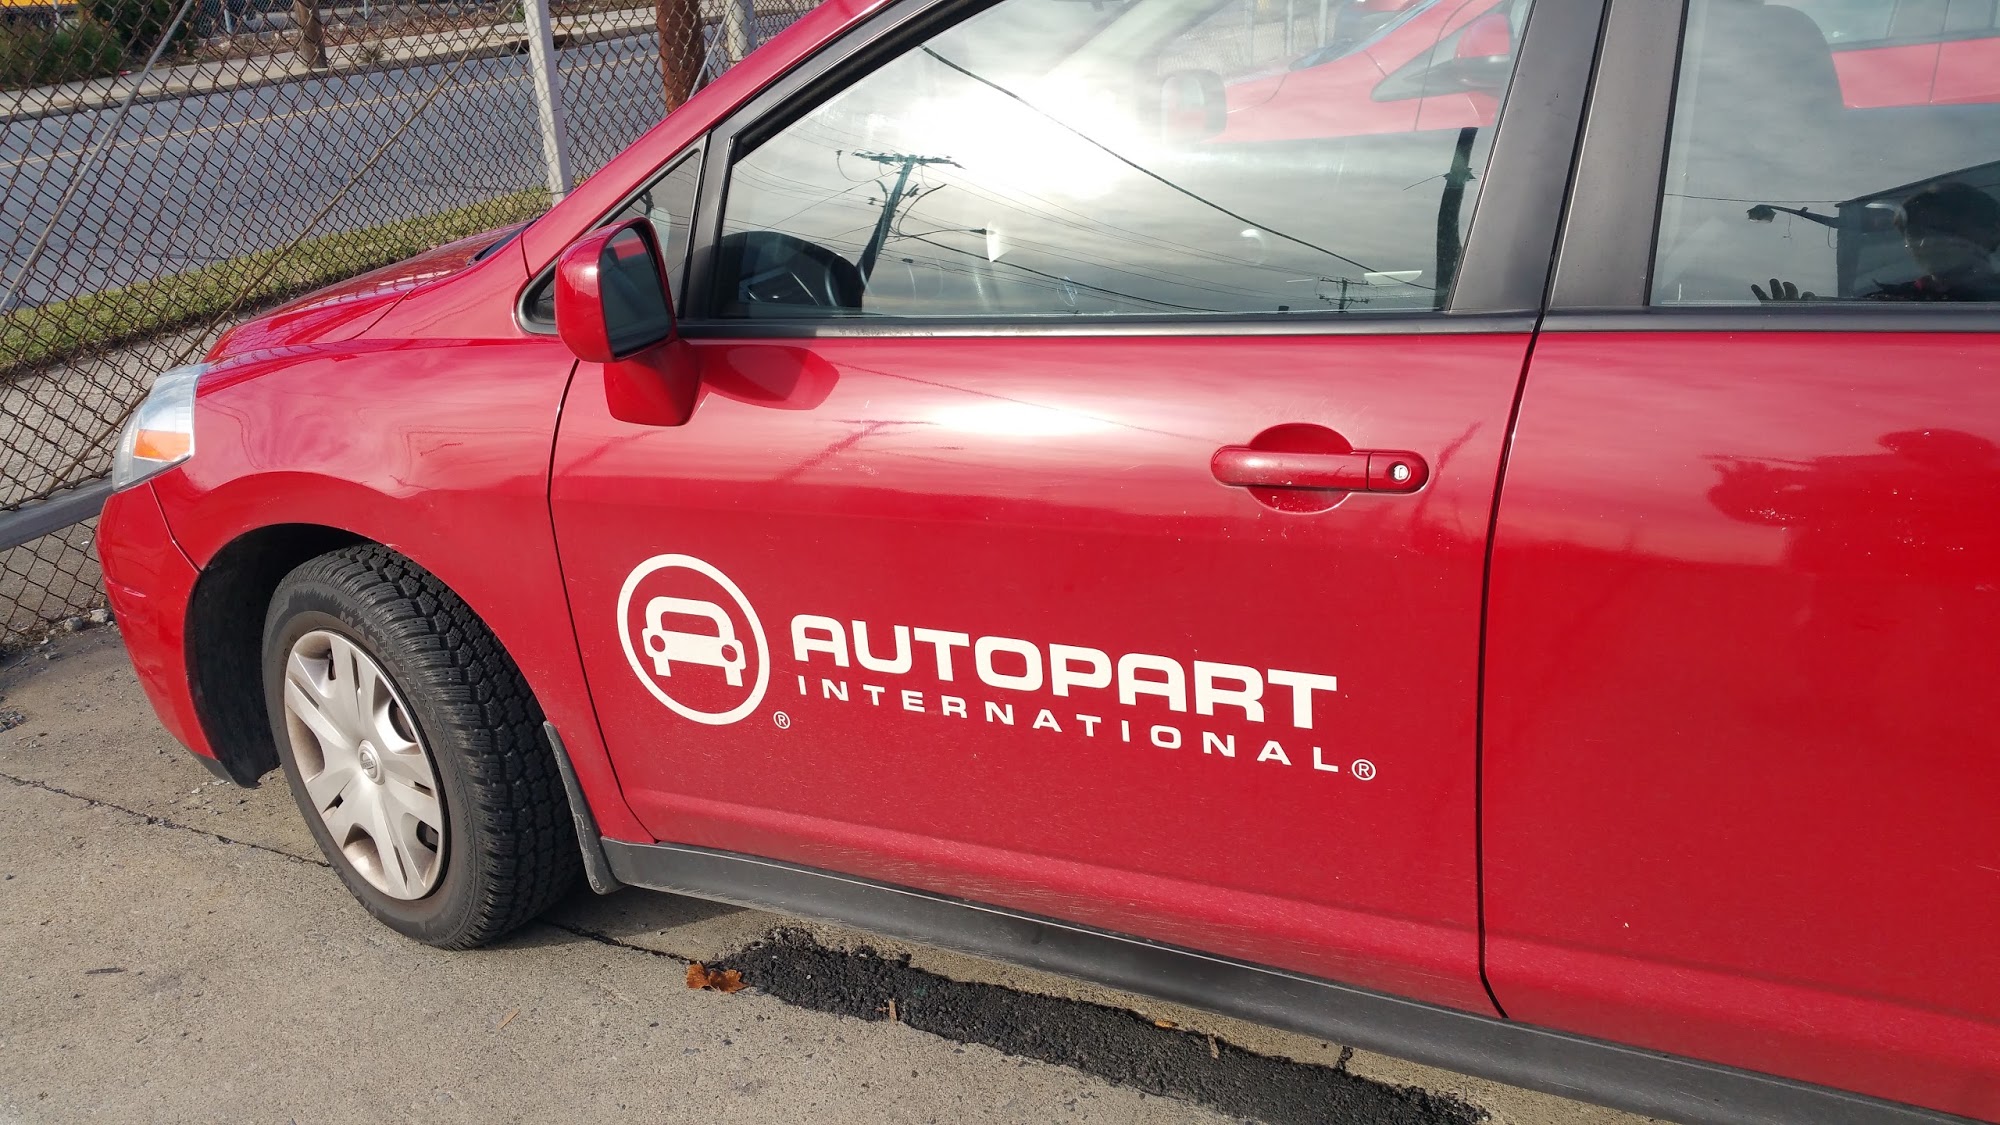 Autopart International